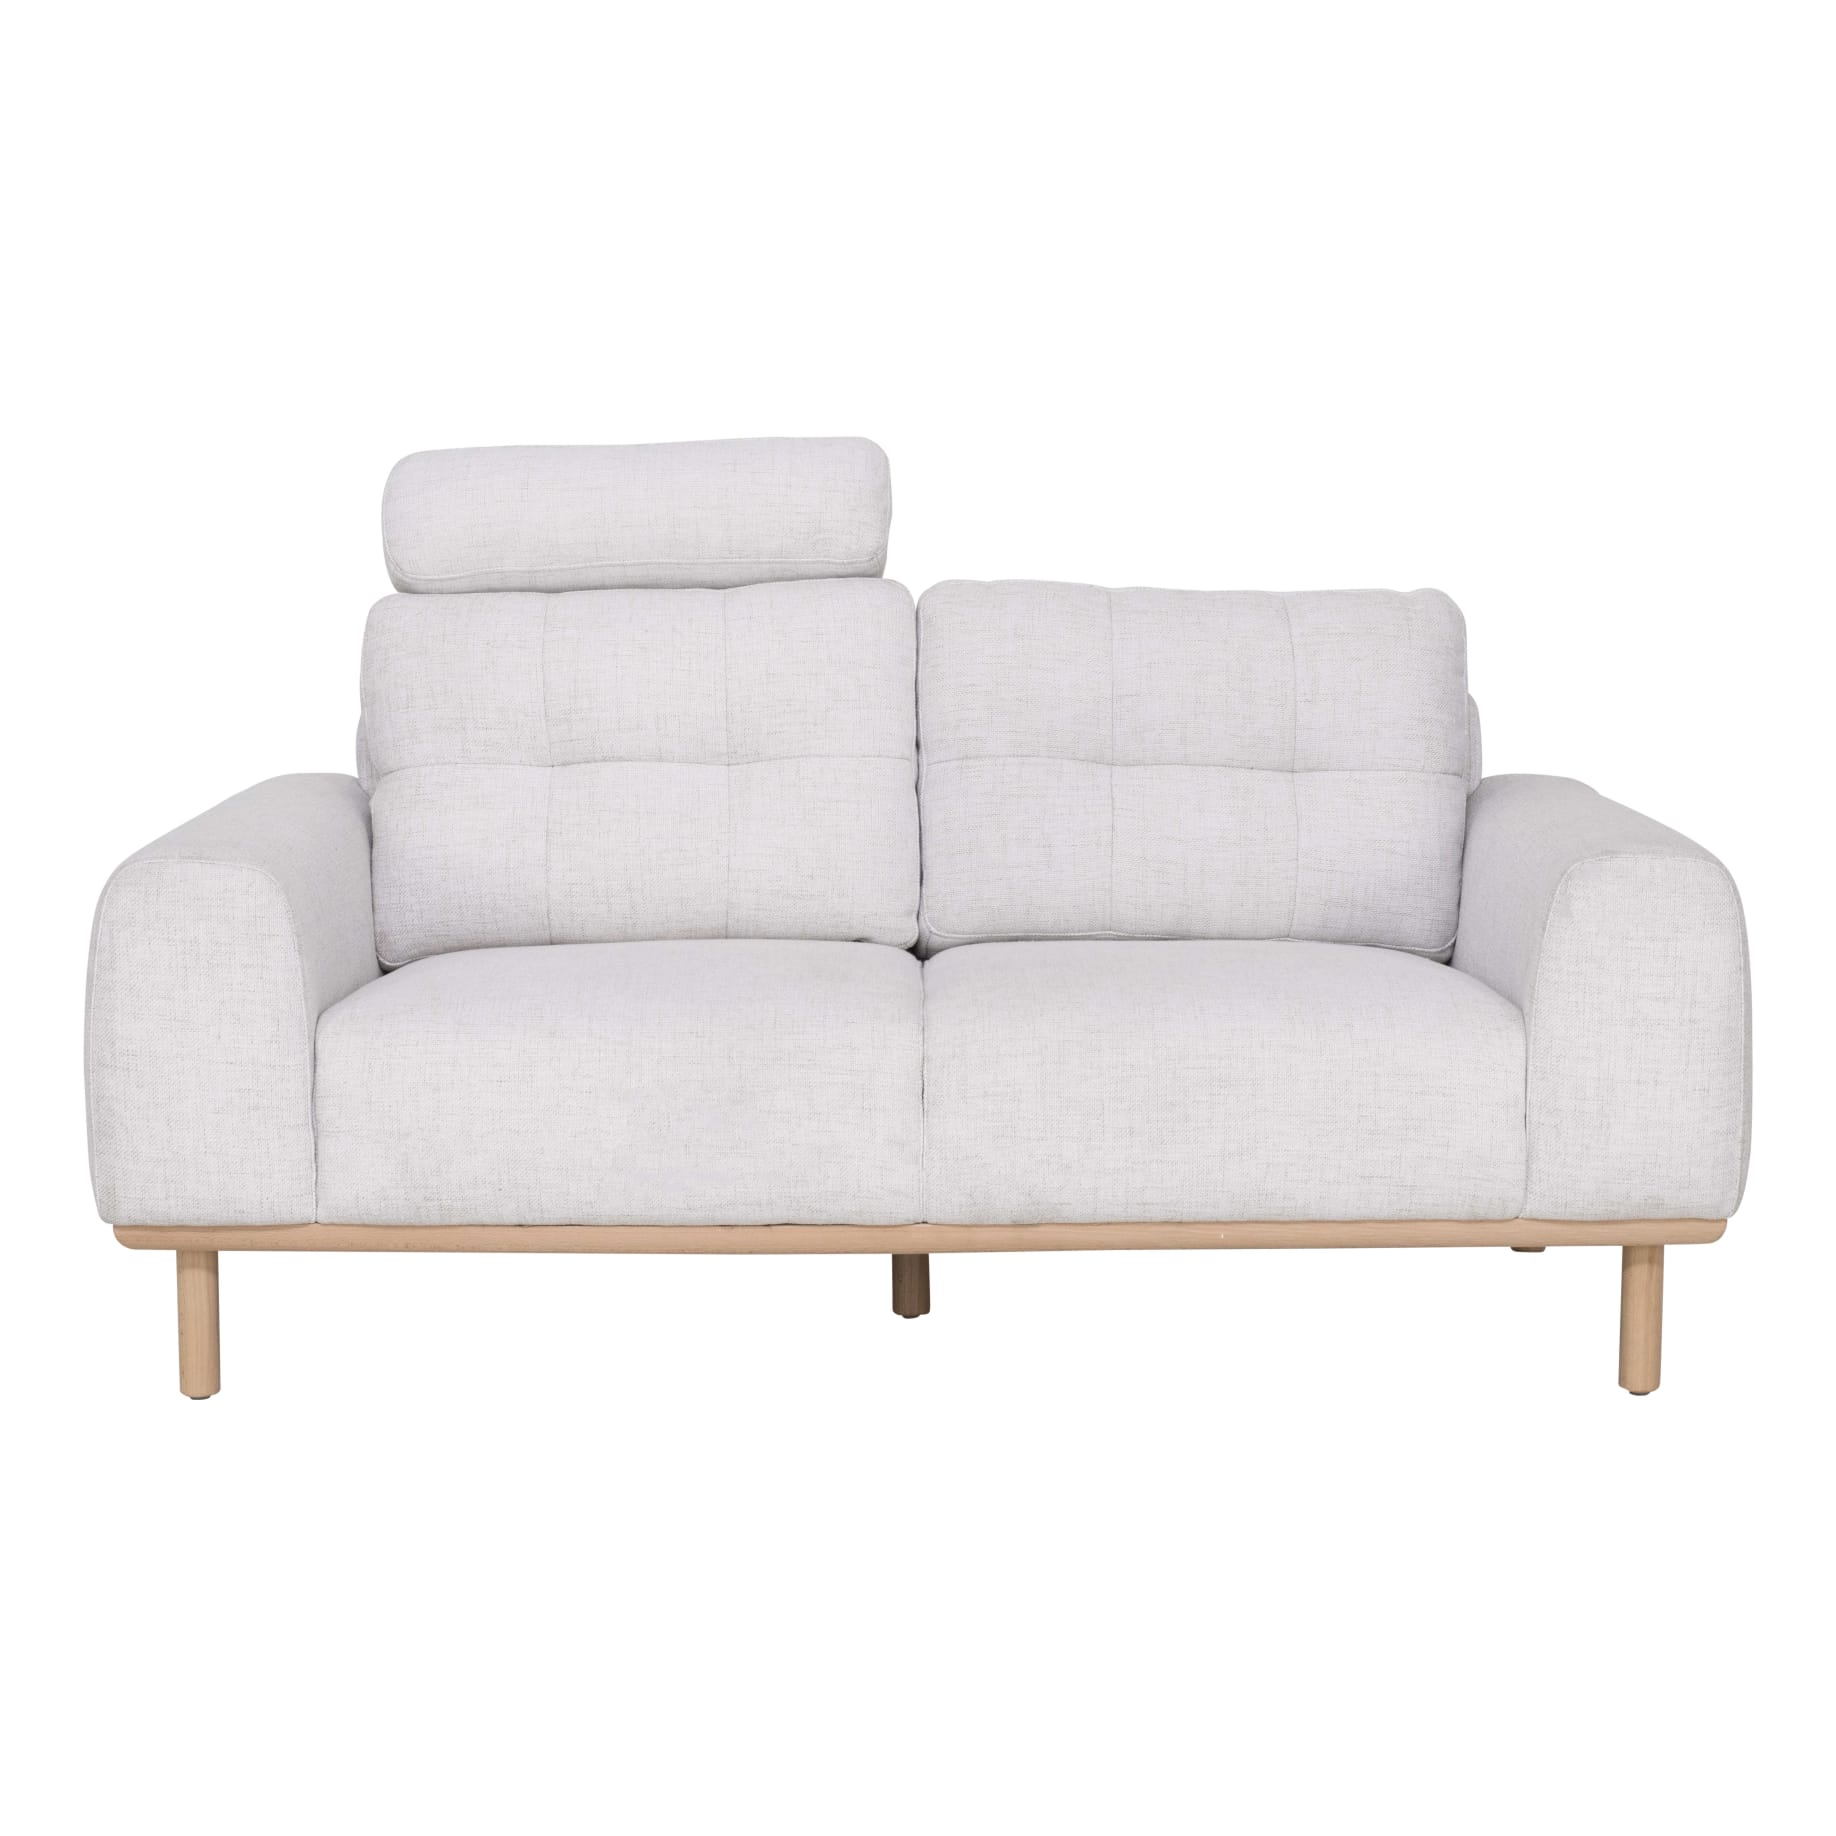 Stratton 2.5 Seater Sofa in Cloud White Sand